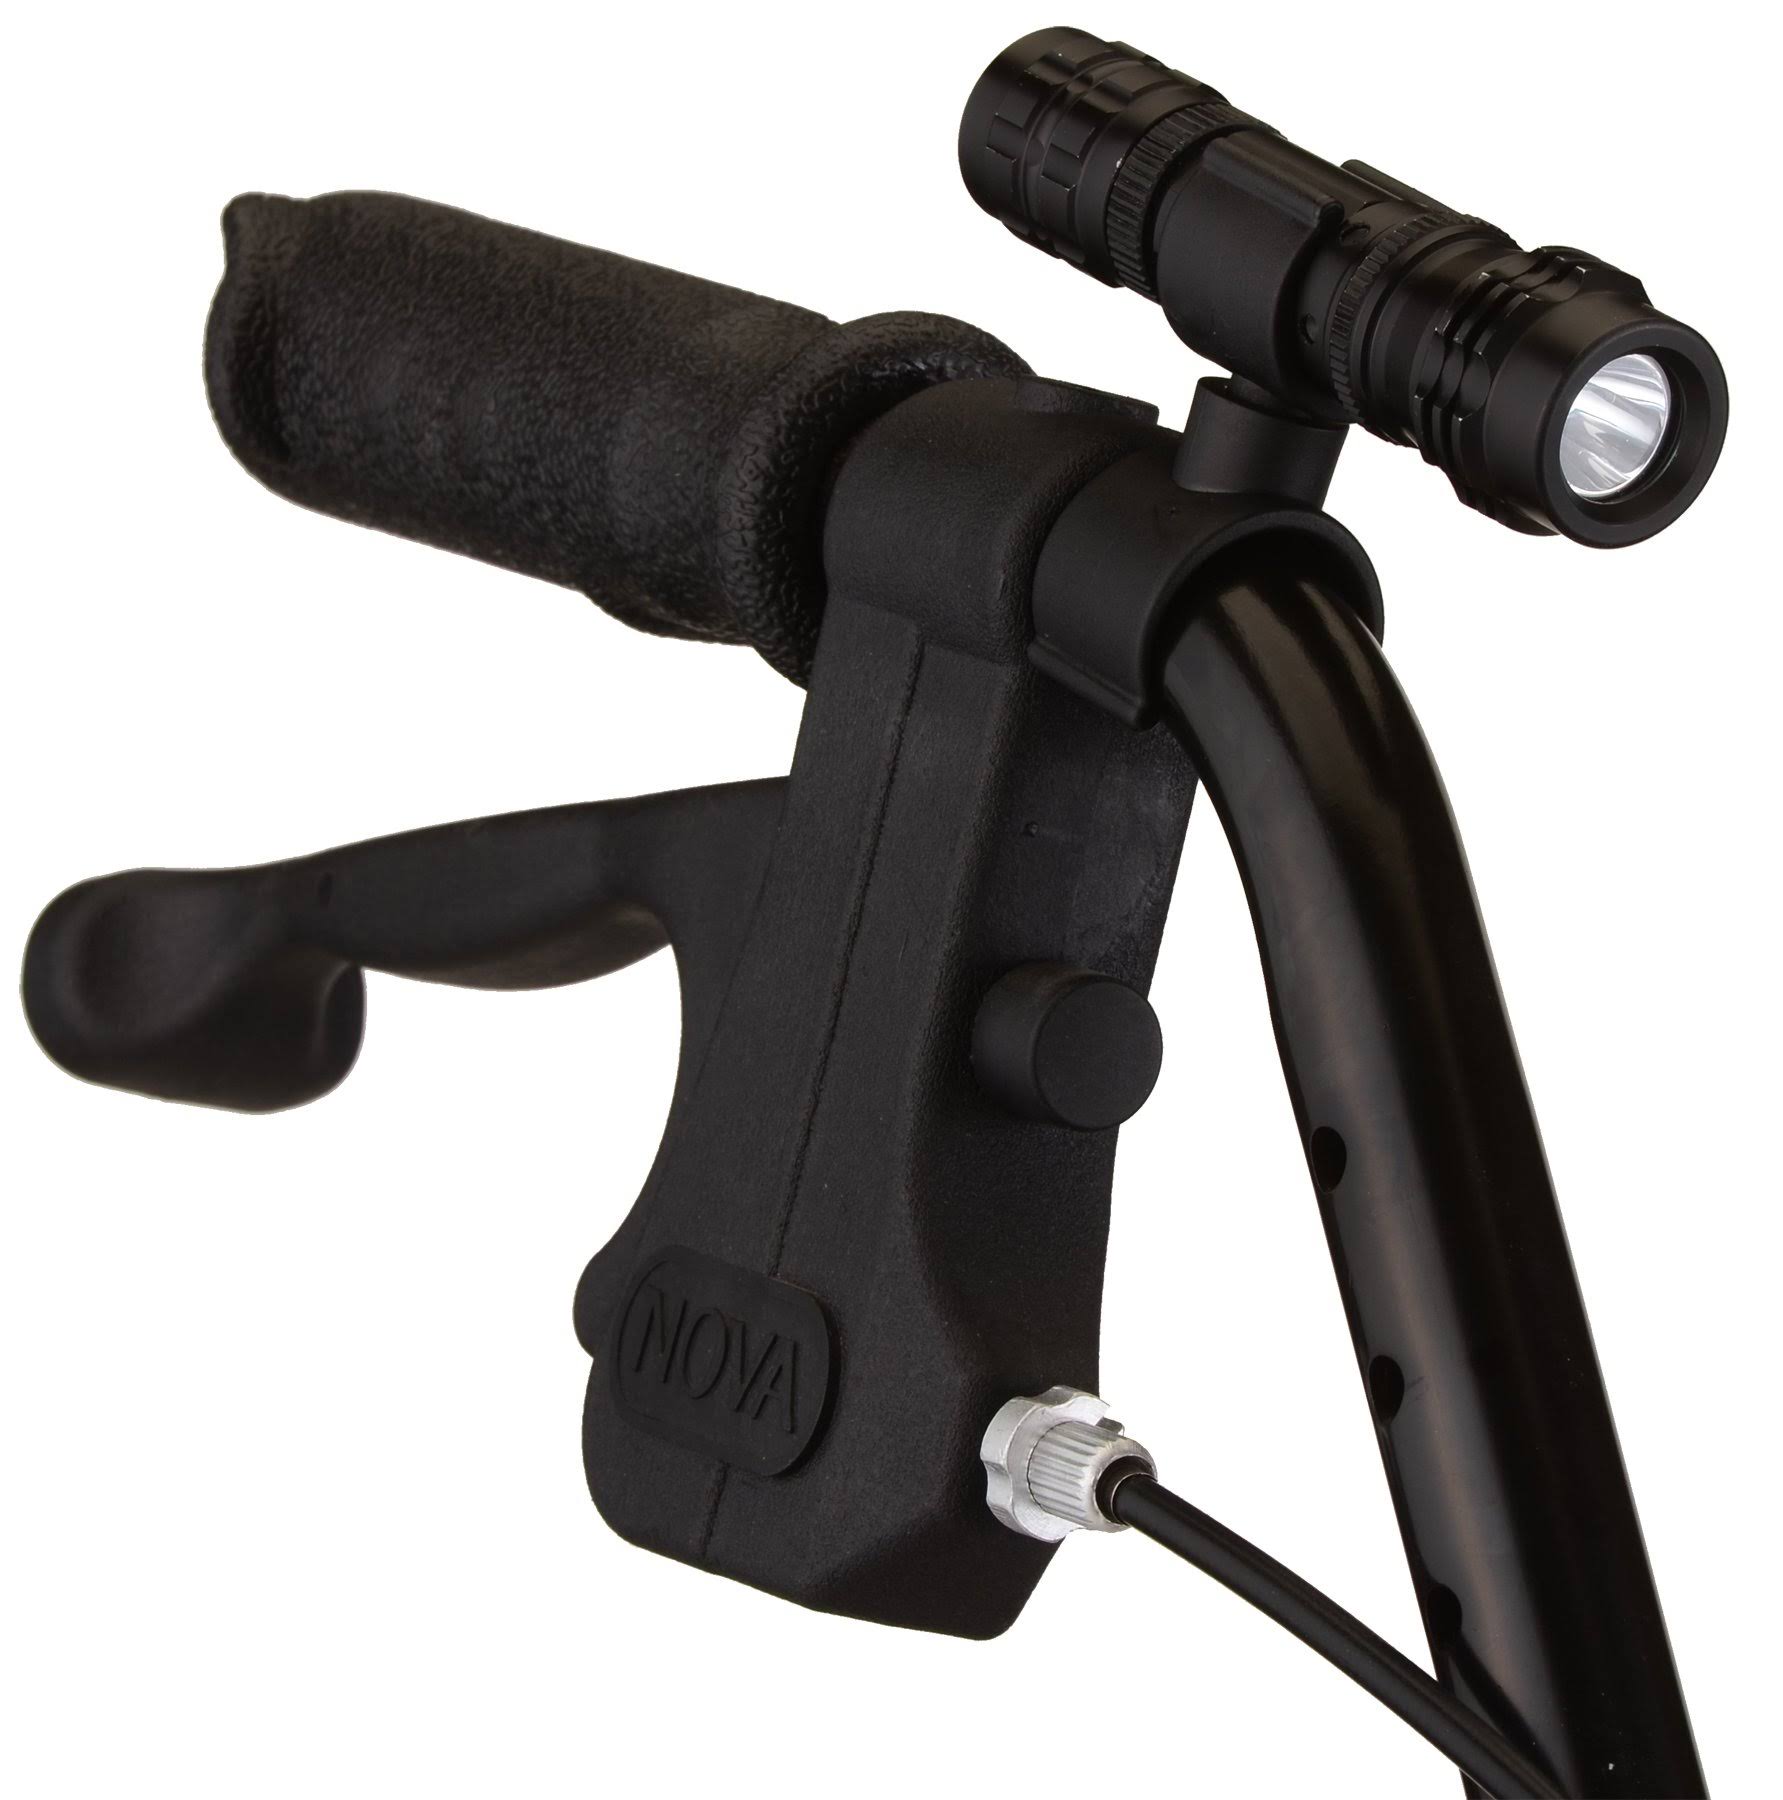 Nova Medical Mobility Flashlight - Black, 1lb